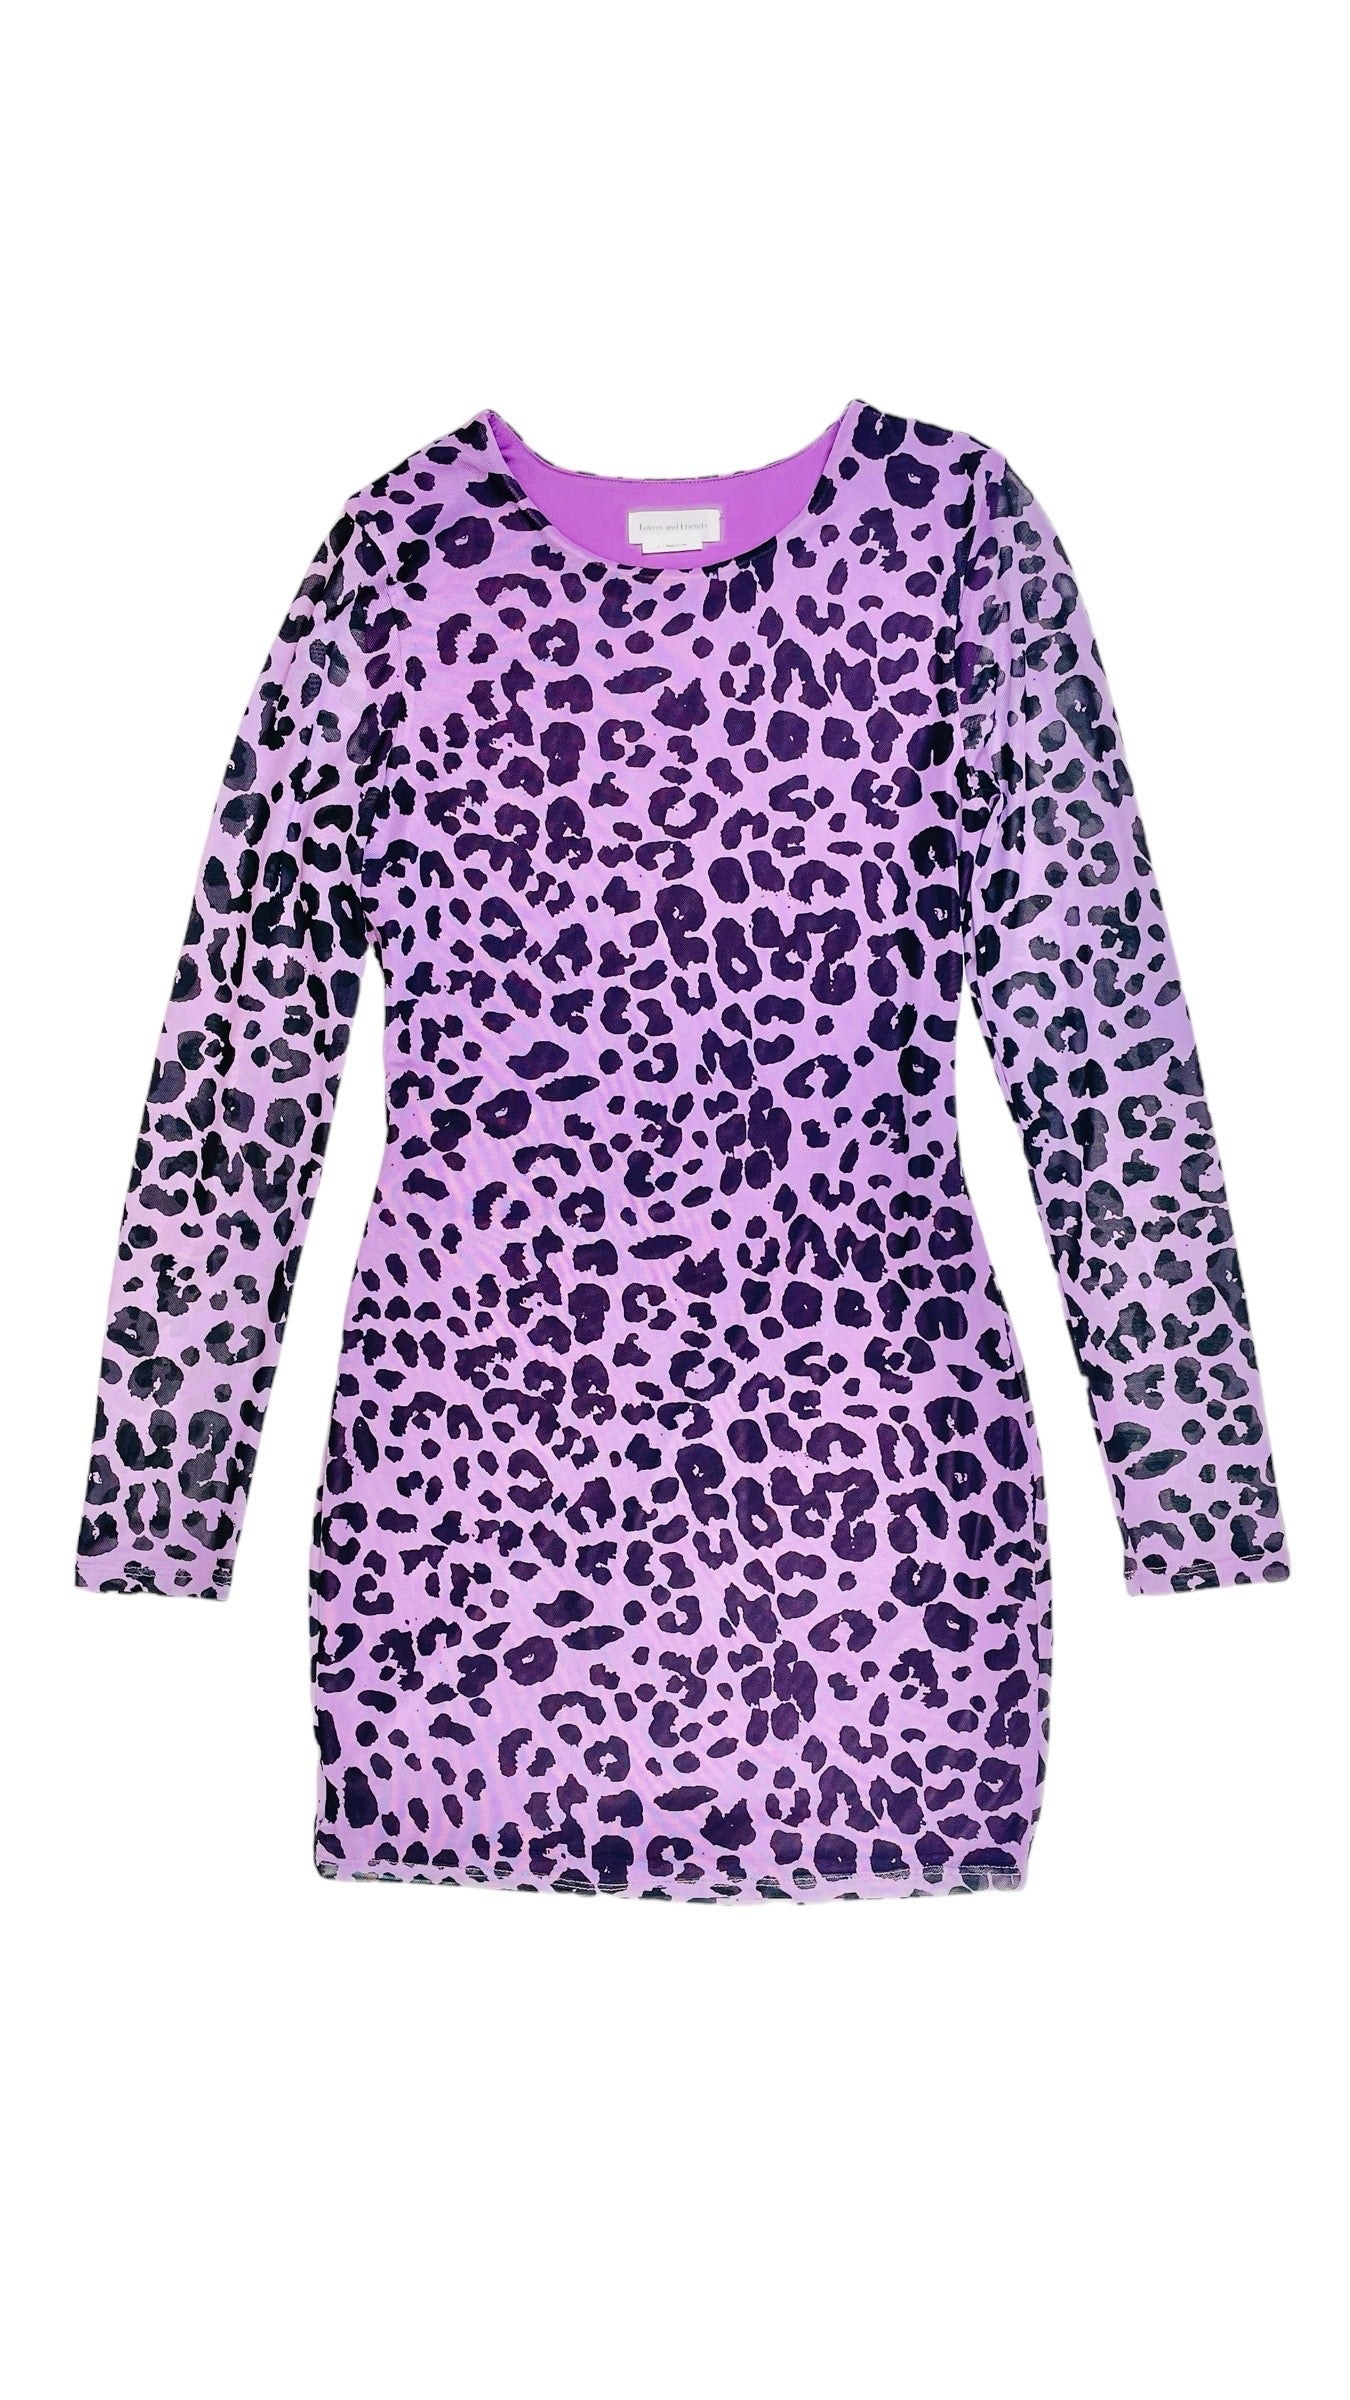 Pre-Loved LOVERS AND FRIENDS purple leopard print mini dress - Size S